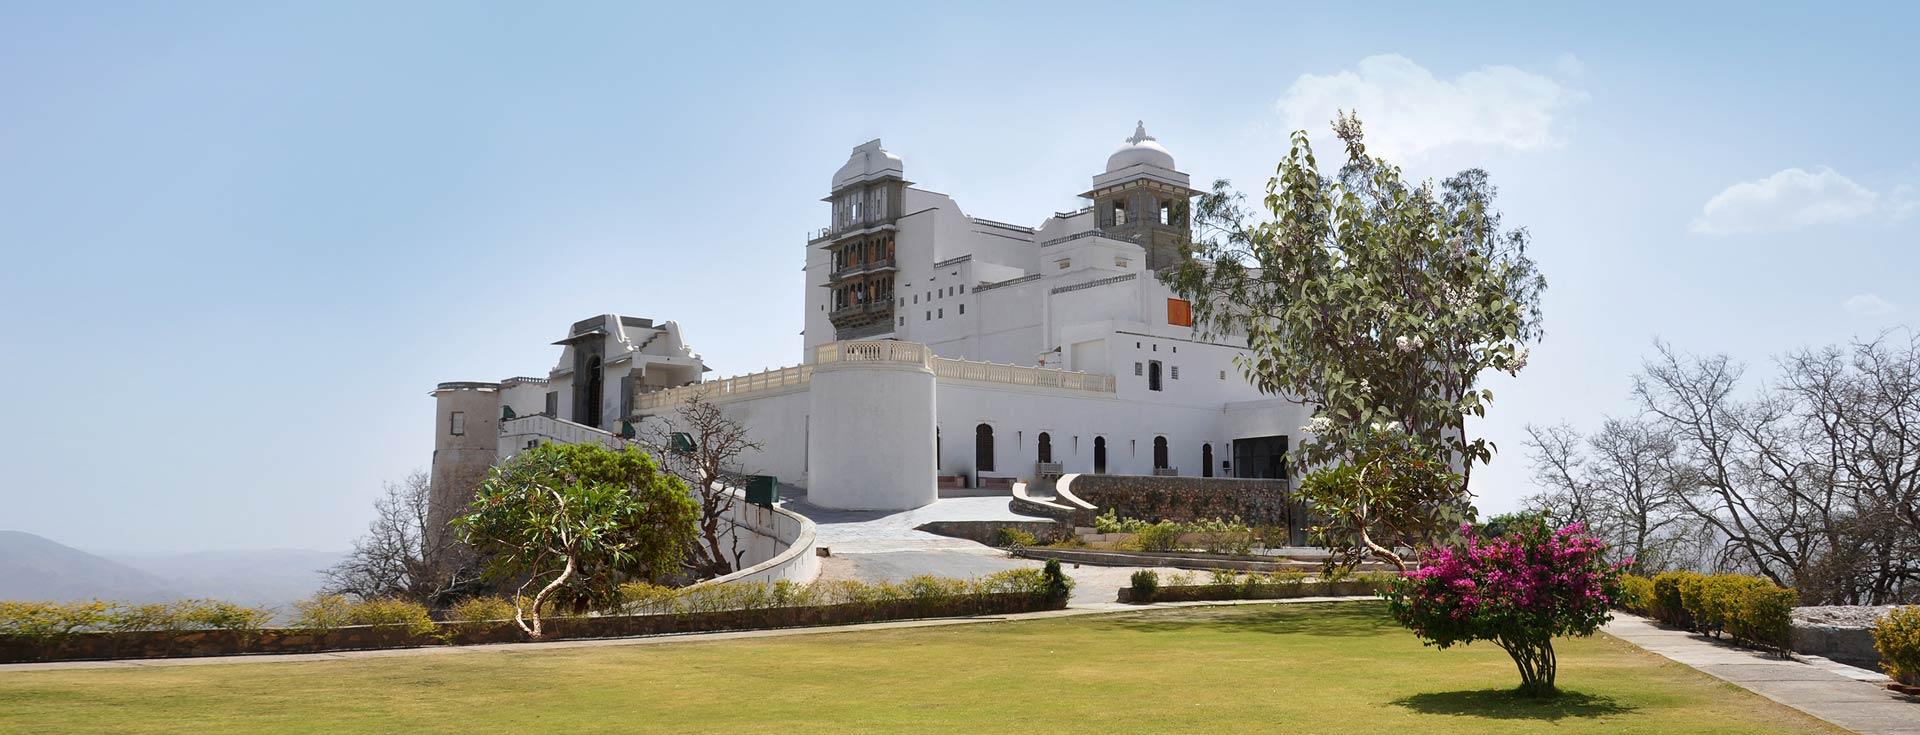 Monsoon Palace at The Leela Palace Udaipur